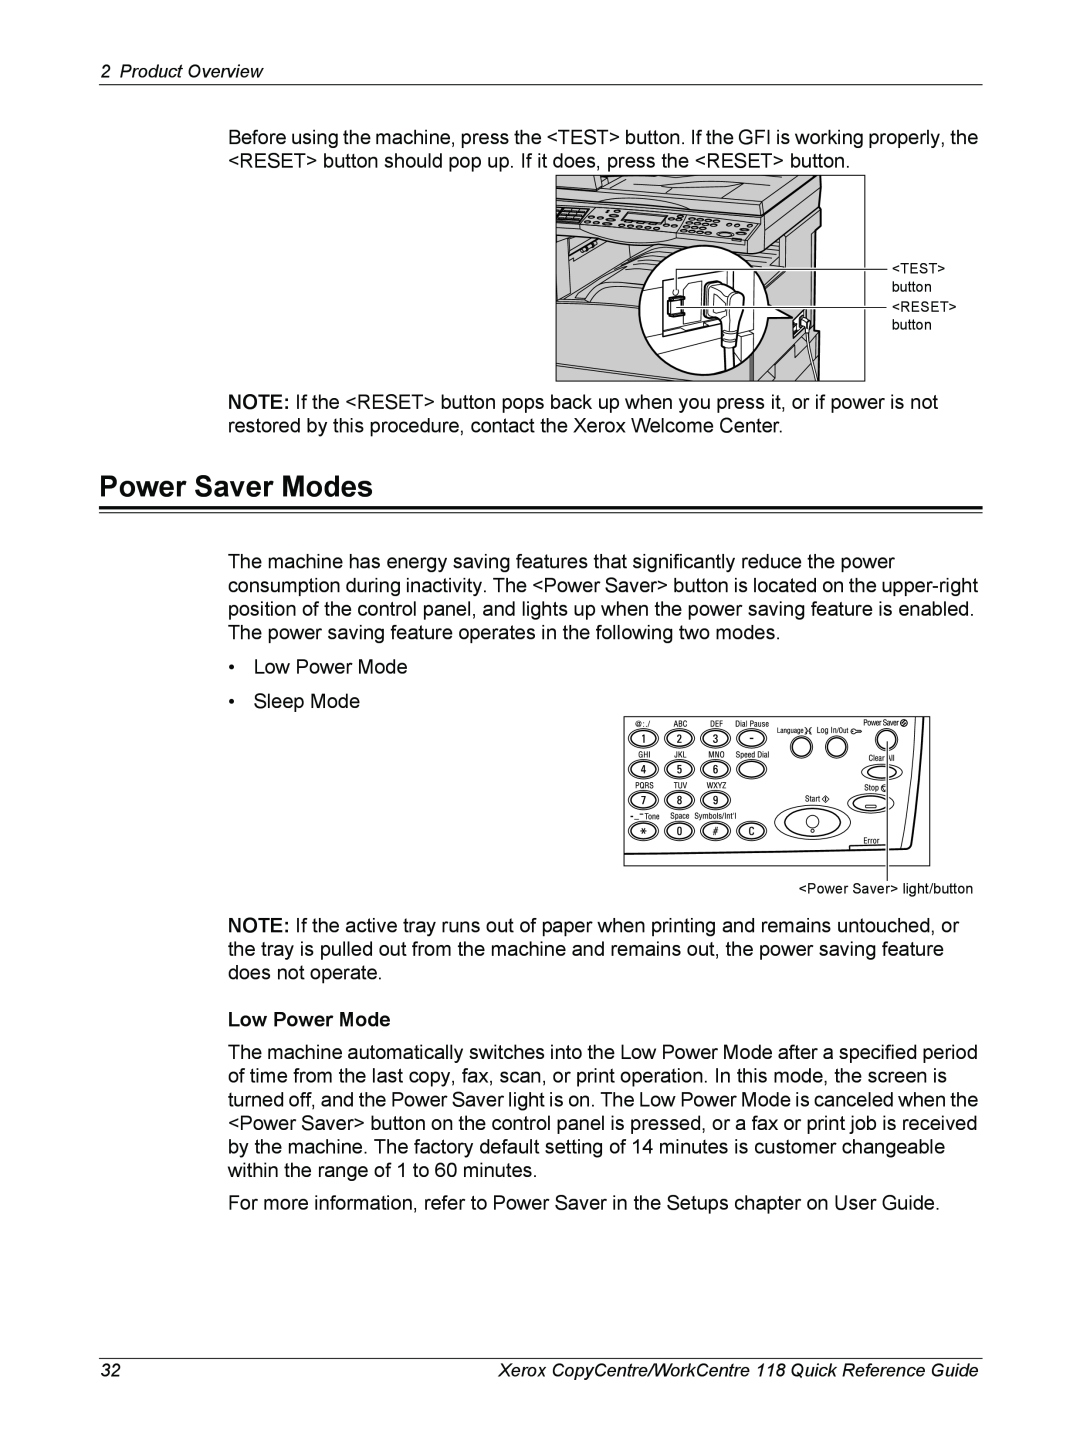 Xerox M118i, C118 manual Power Saver Modes, Low Power Mode 